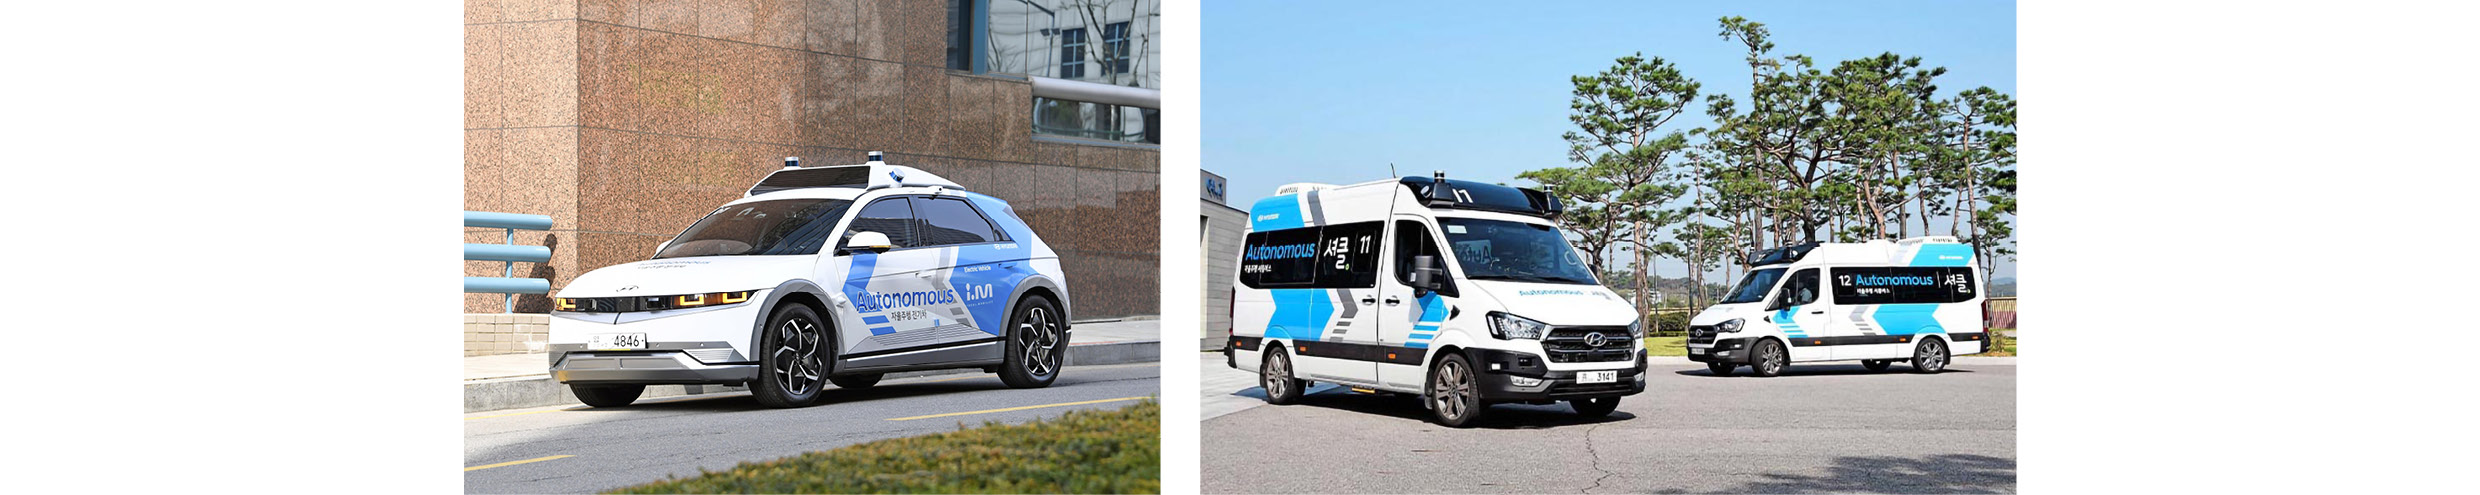 Hyundai Motor Group's self-driving vehicles